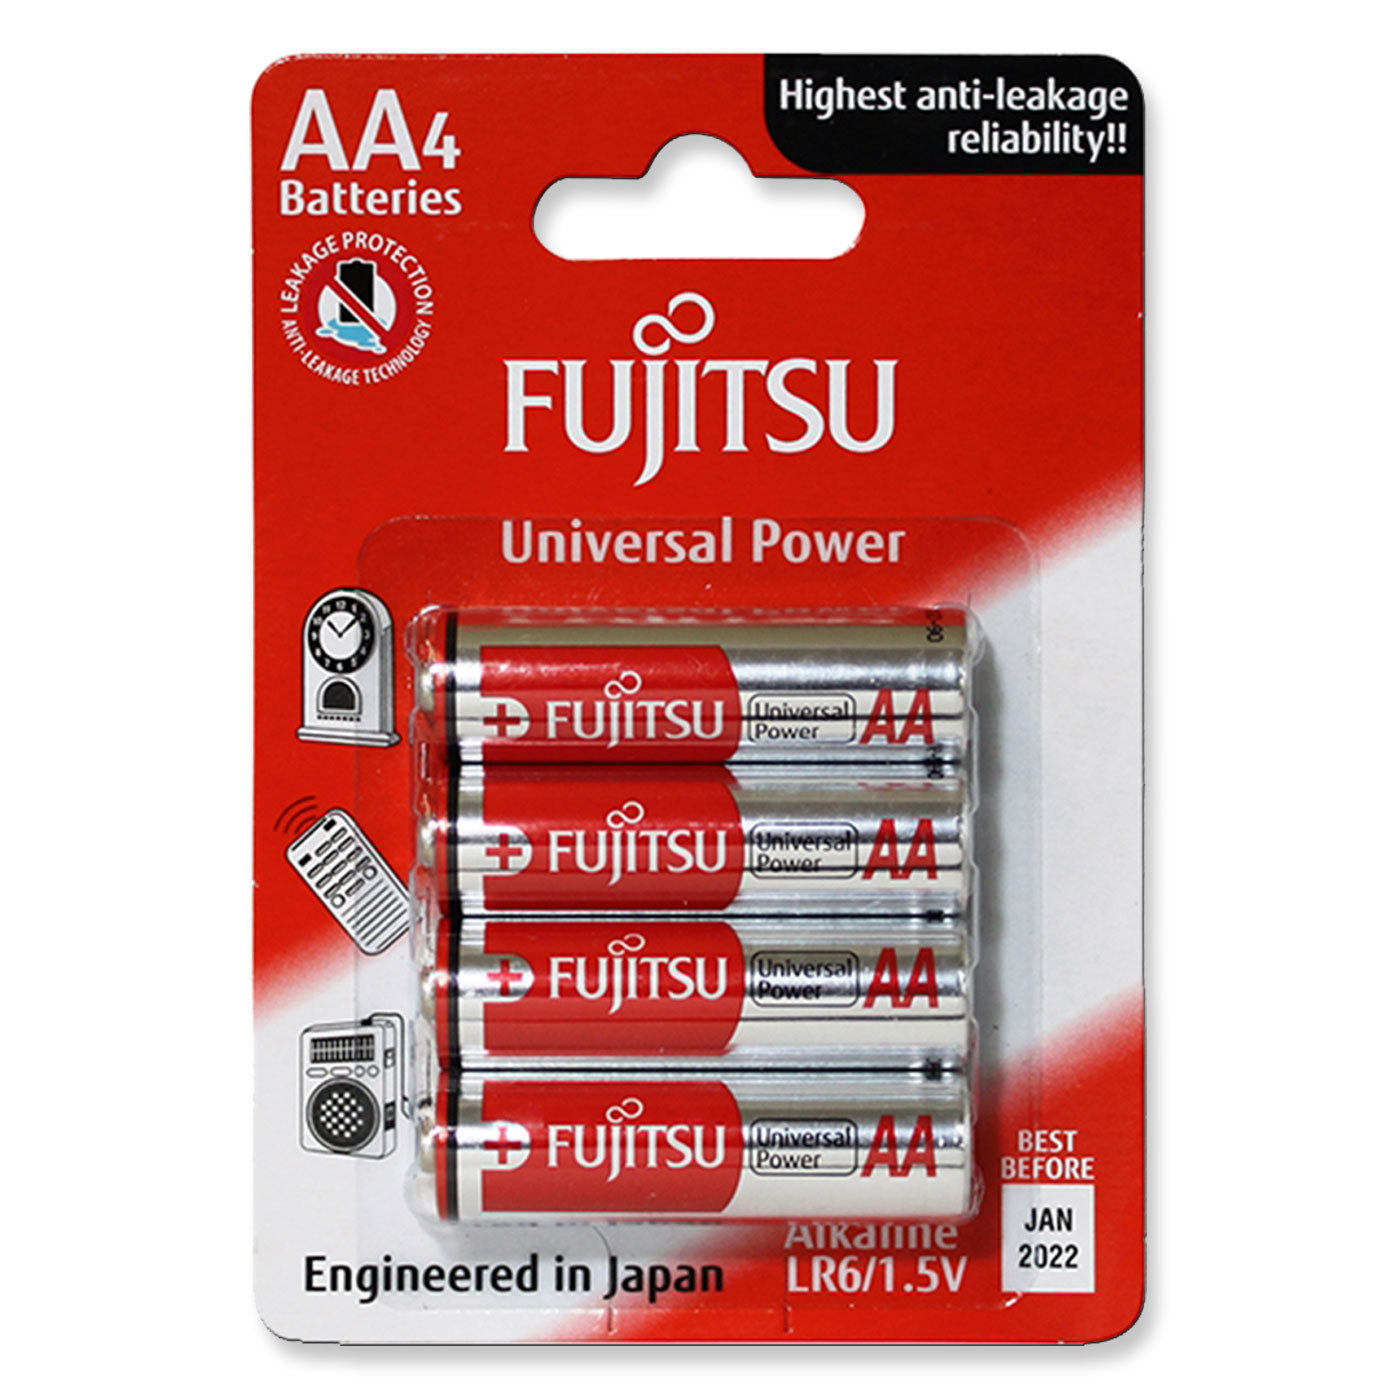 Fujitsu Batteries AA Universal 4 Pack [1.5 Volt]